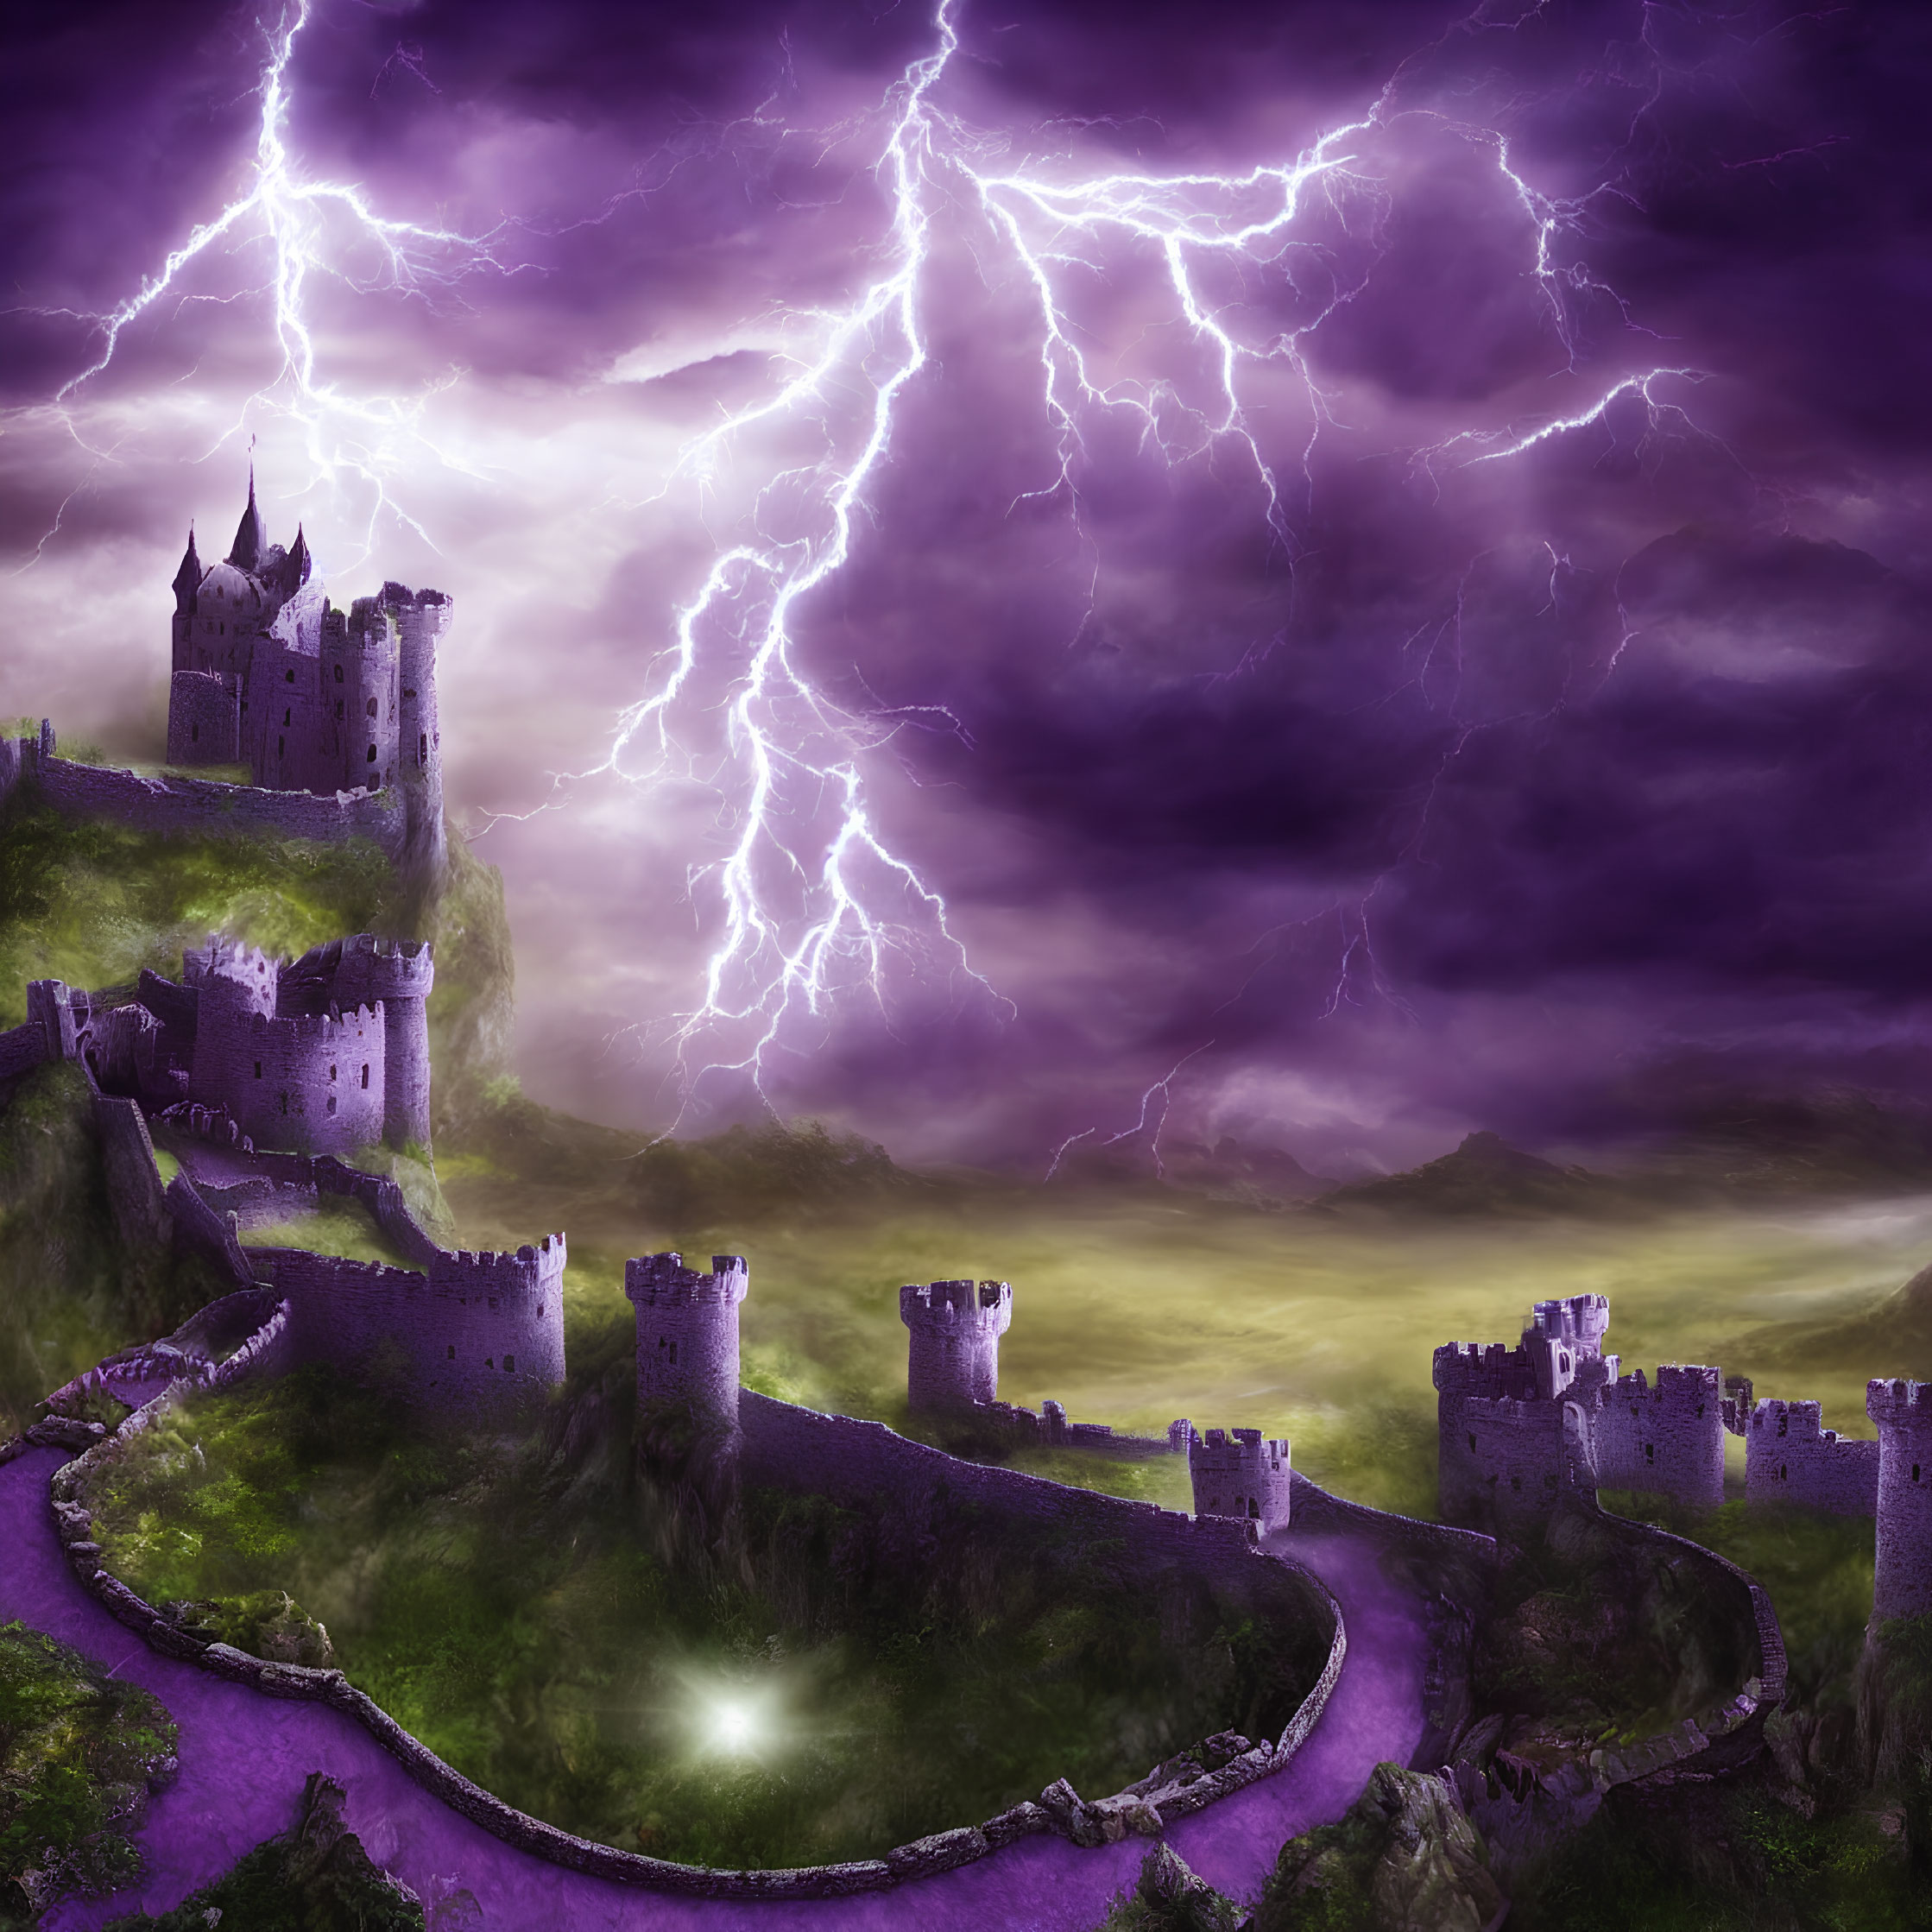 Fantastical night scene: ancient castle, stormy sky, purple lightning